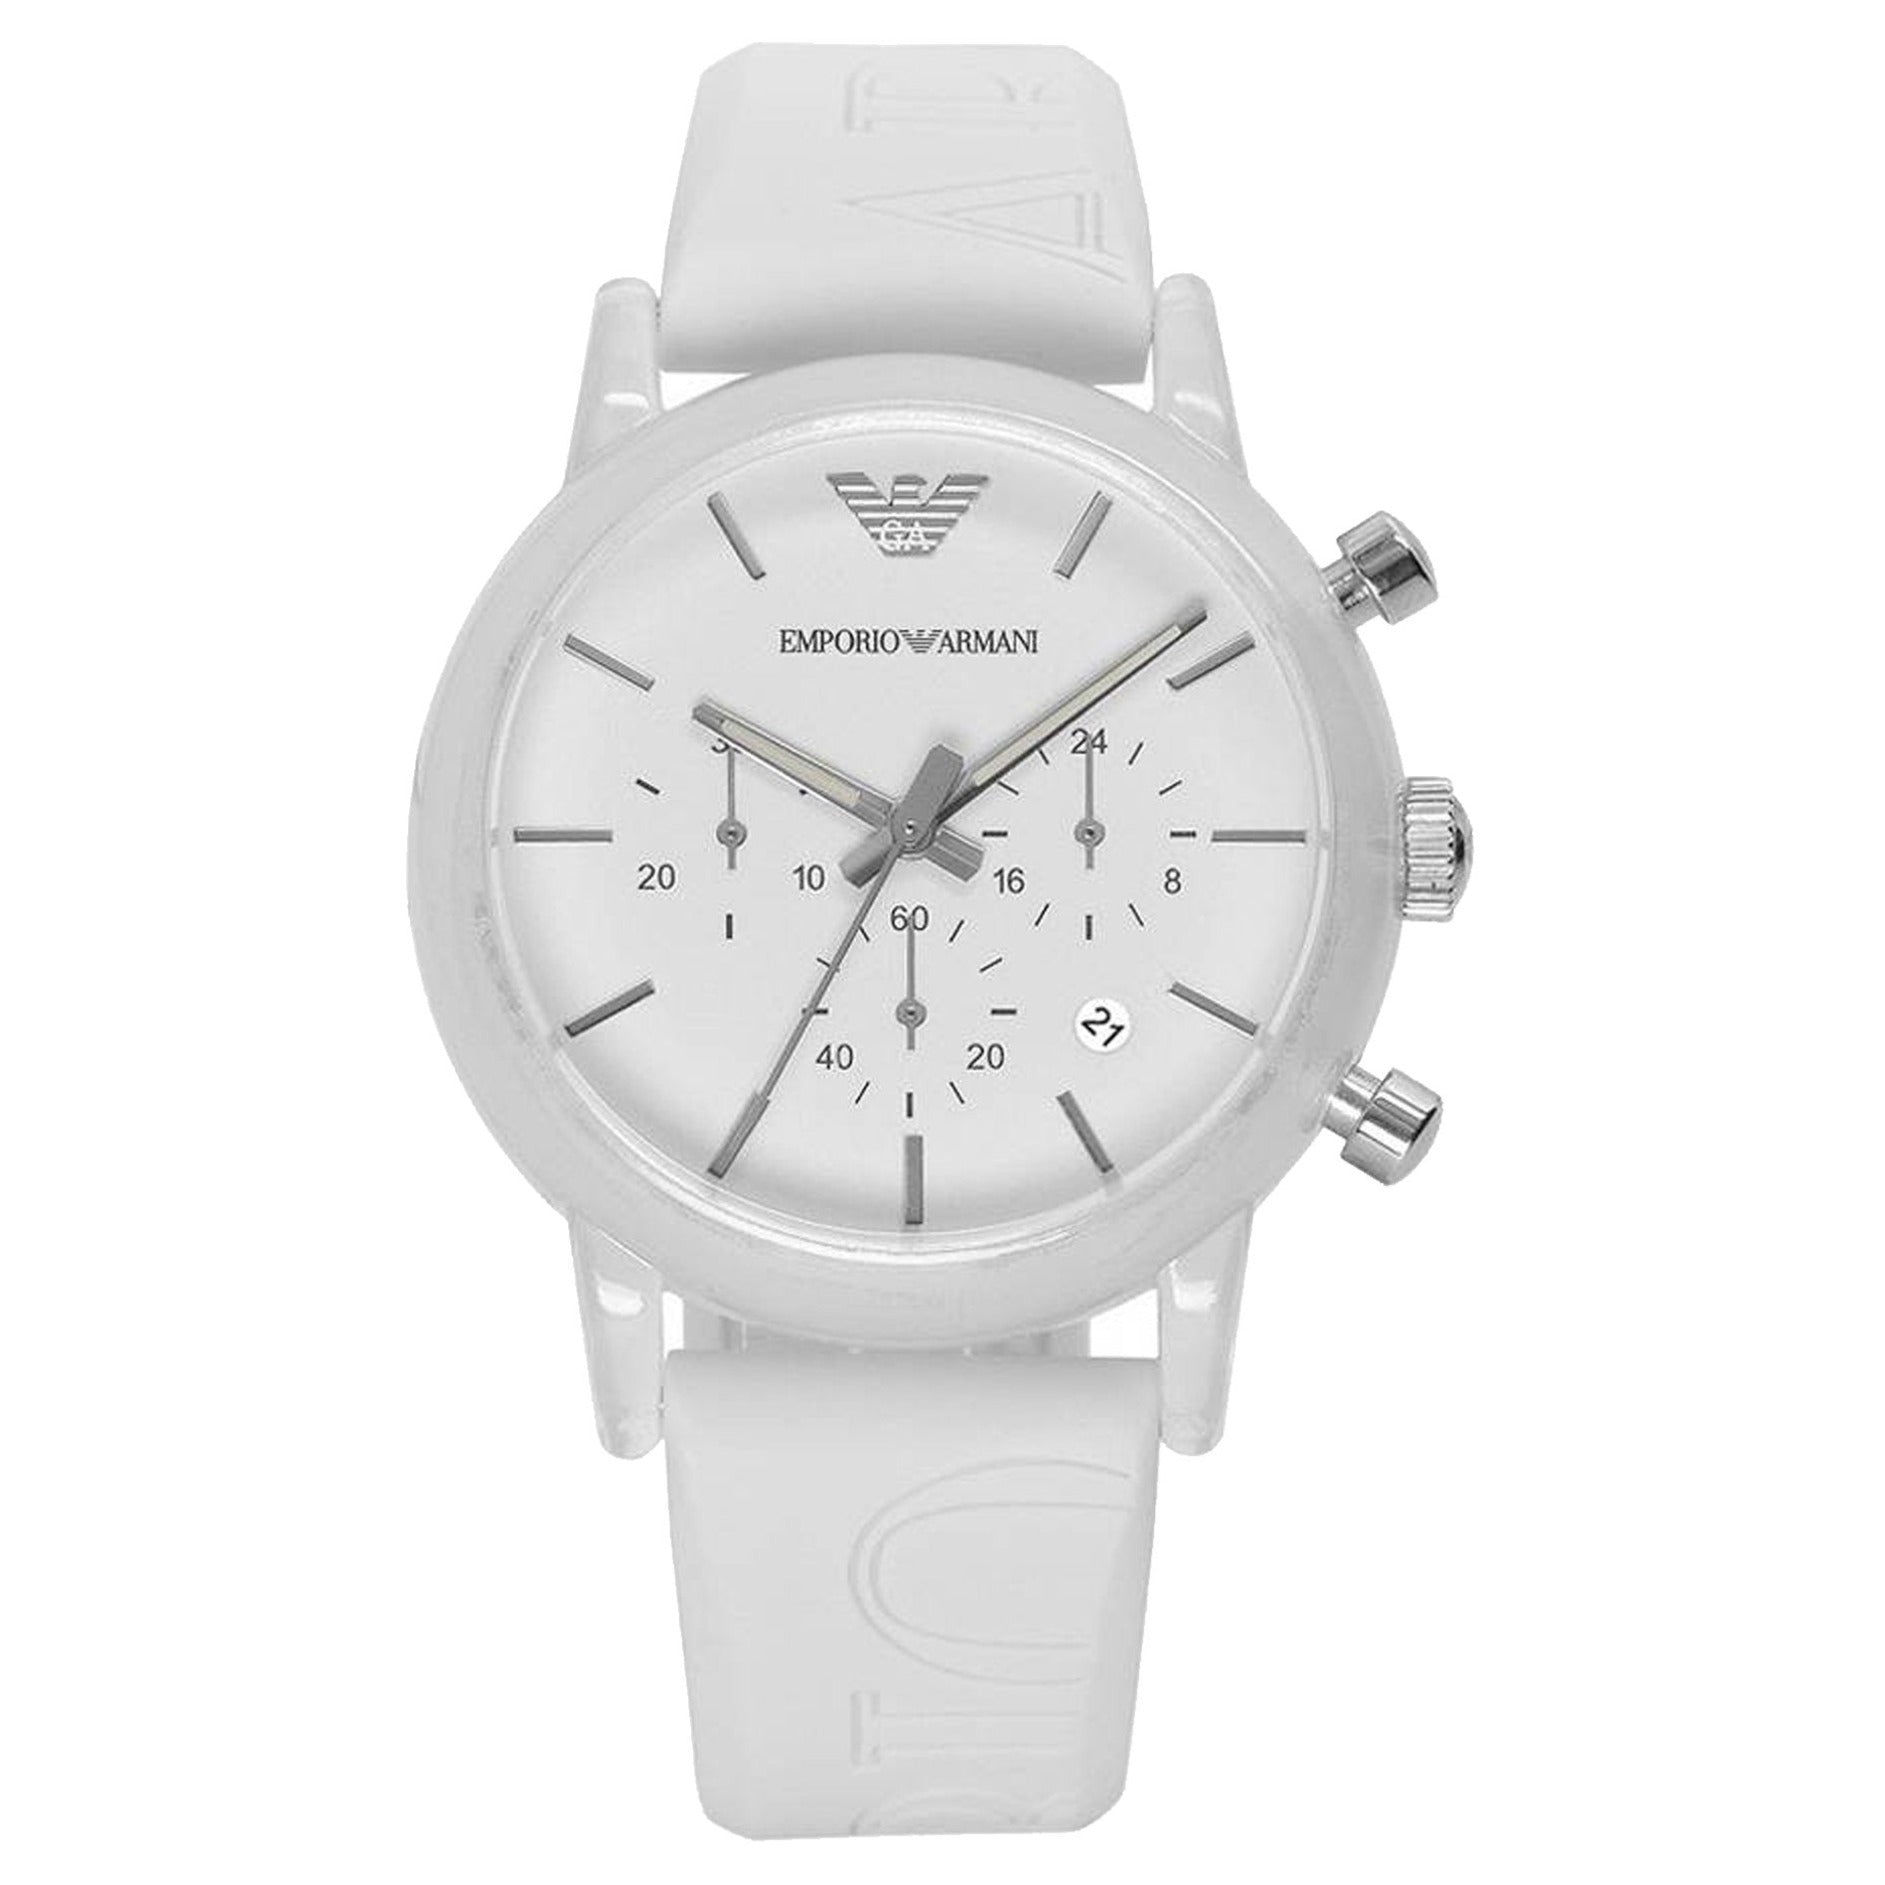 Emporio Armani Men's Chronograph Watch White PVD AR1054